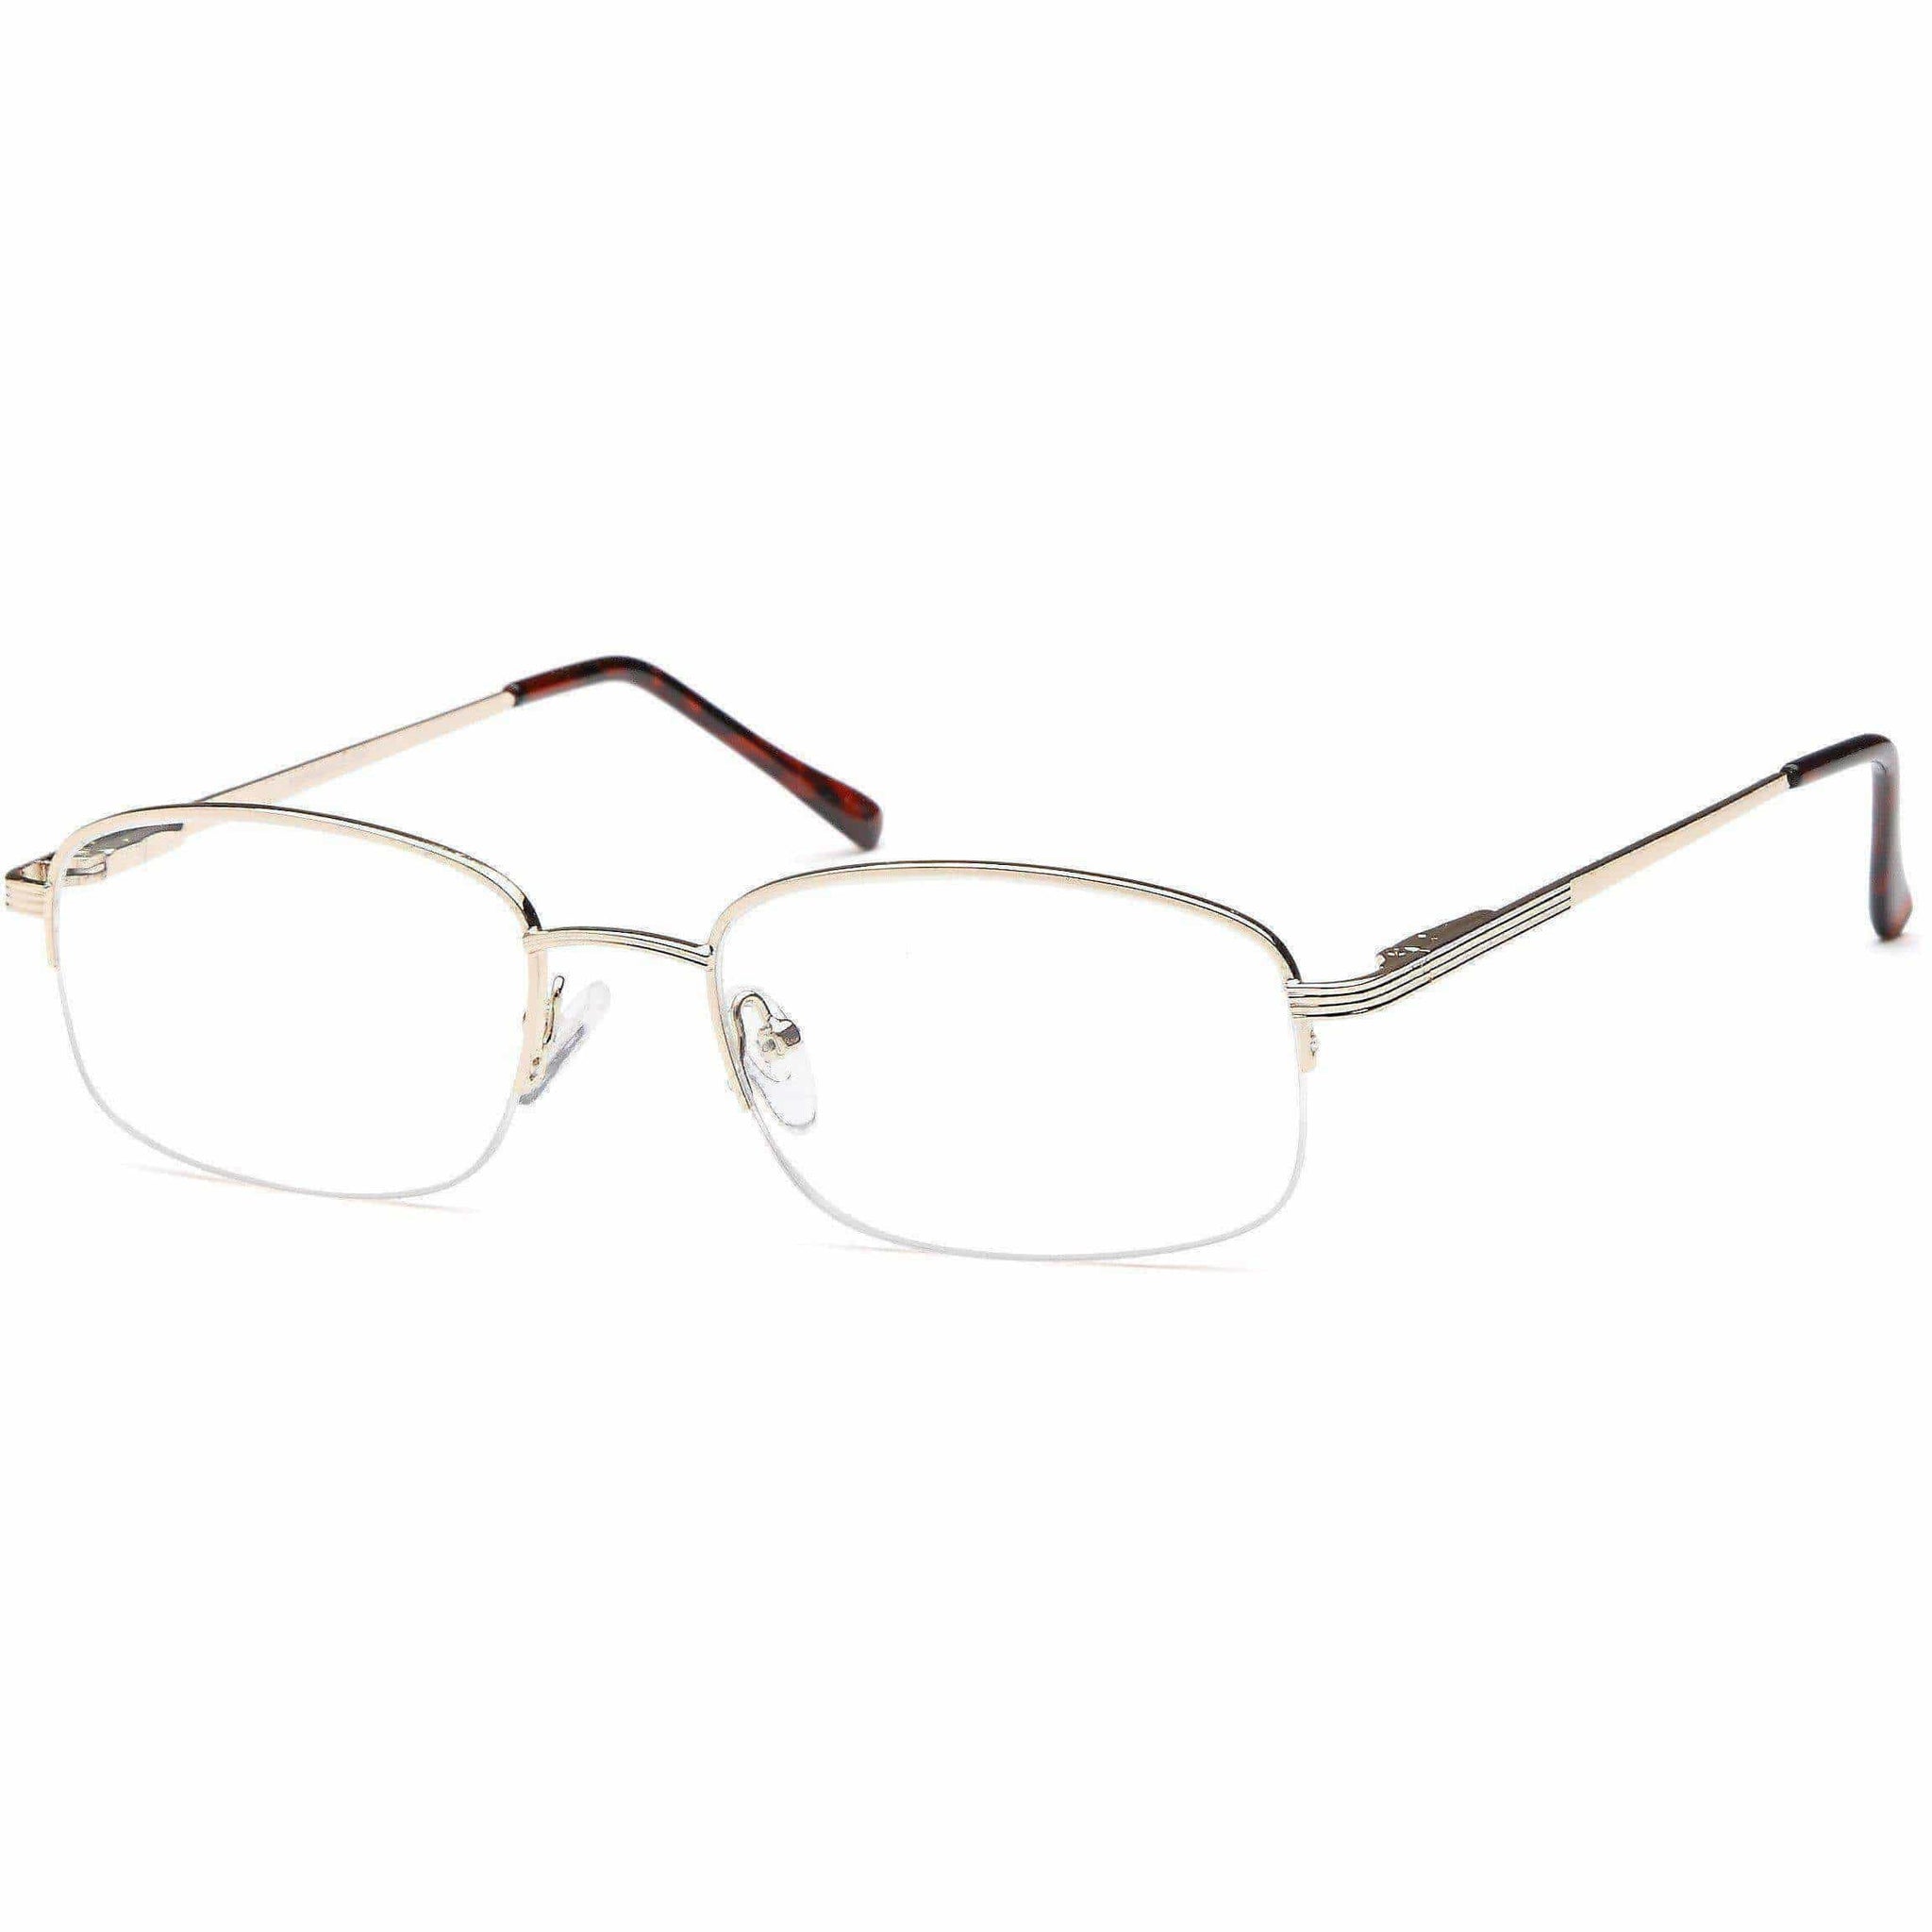 Classics Prescription Glasses RENAISSANCE Frames | express-glasses